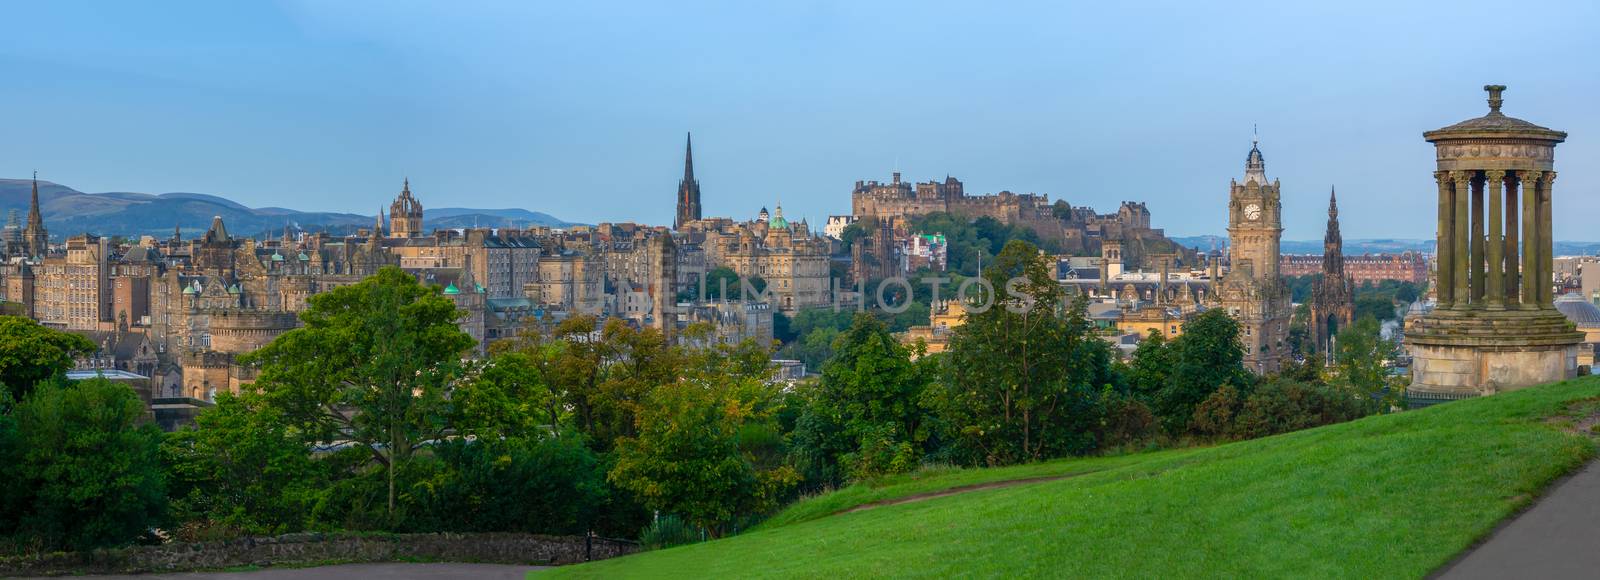 Edinburgh Castle Panorama At Dawn by mrdoomits